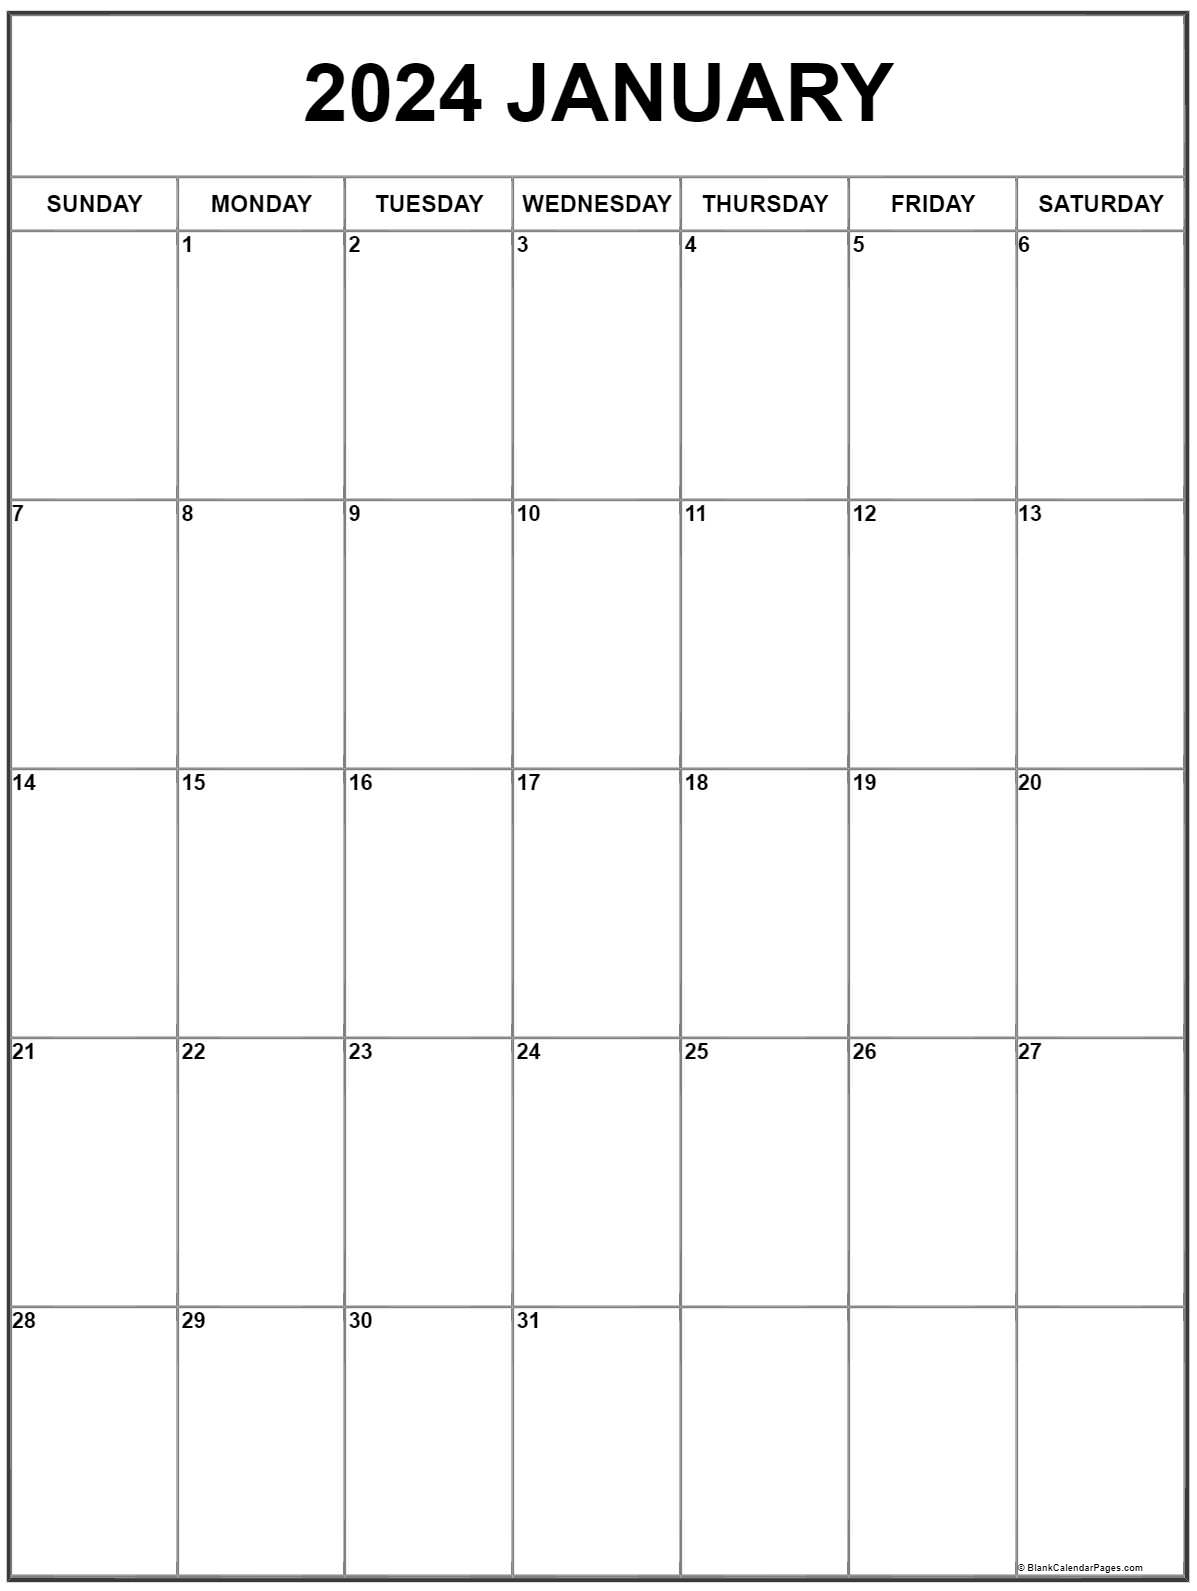 2024 Printable Calendar By Month Vertical Lotti Rhianon - Free Printable 2024 Vertical Monthly Calendar